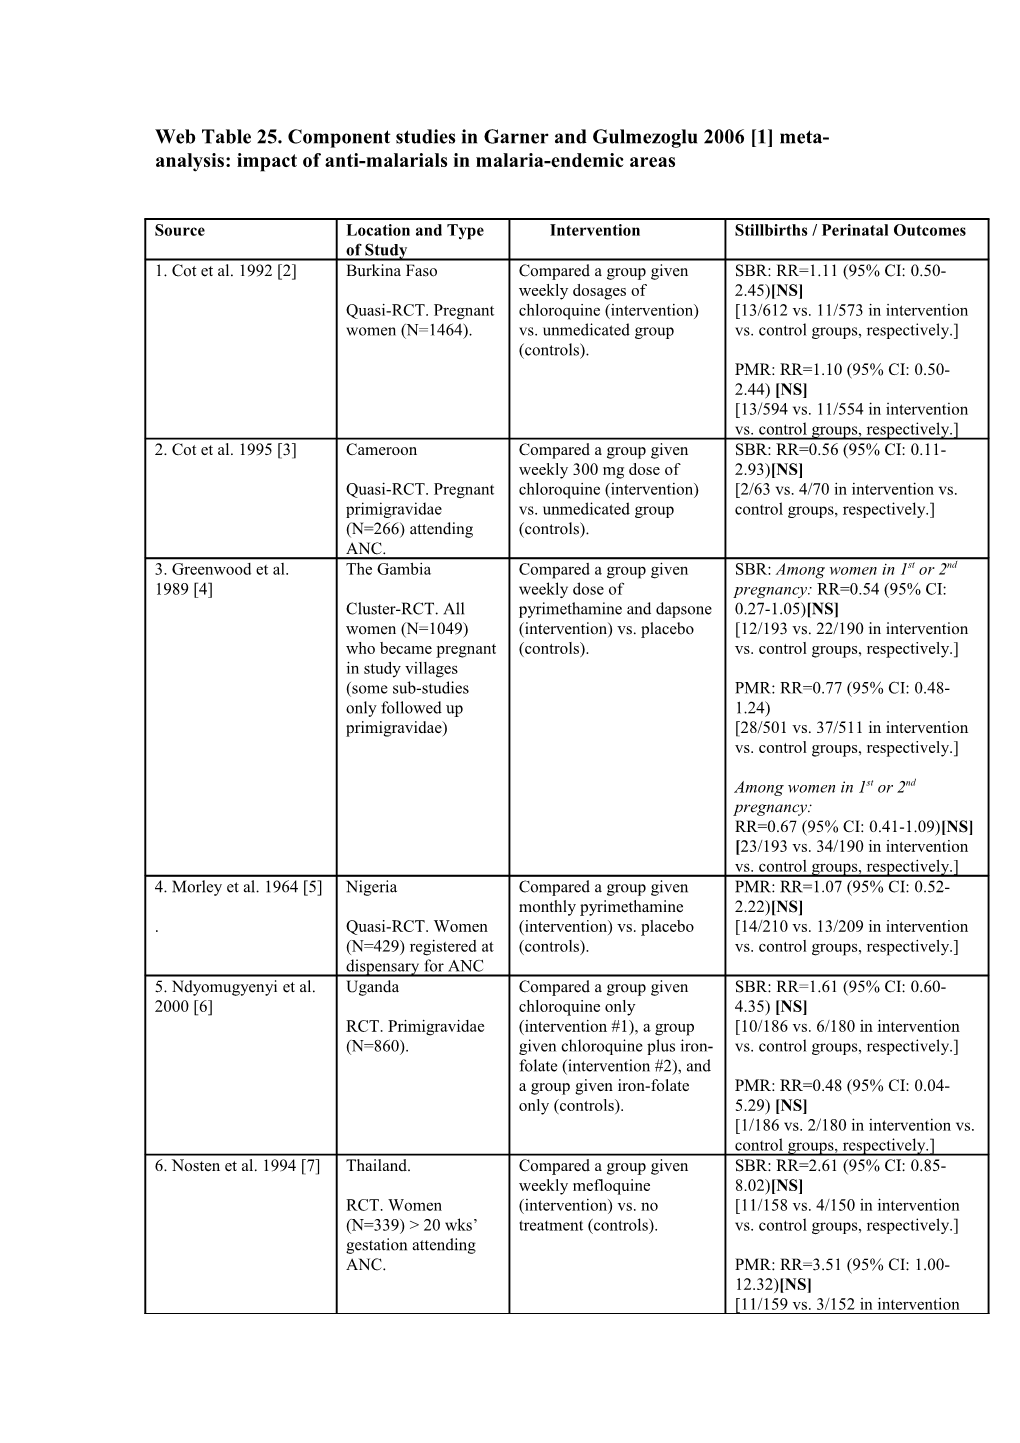 Web Table 25. Component Studies in Garner and Gulmezoglu 2006 1 Meta-Analysis: Impact